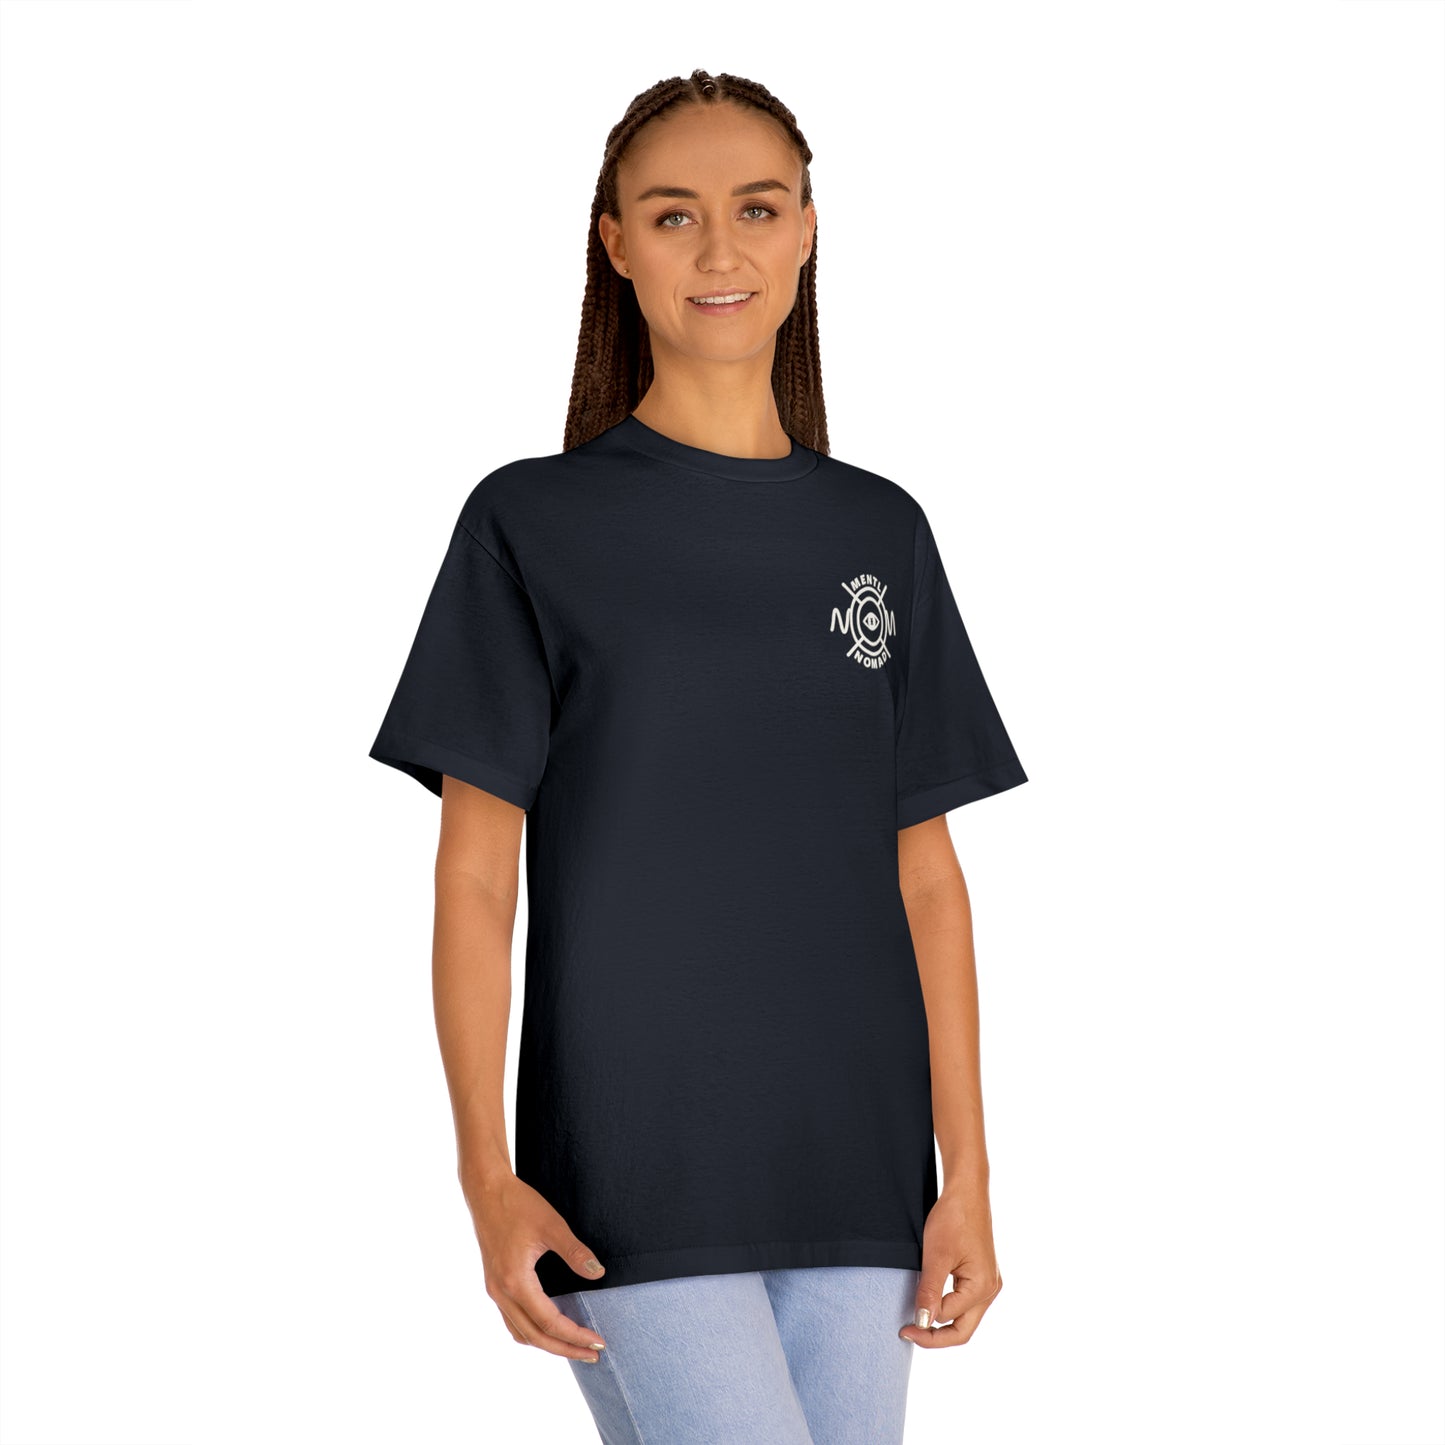 Mentl Nomad Crest (basics dark) T-Shirt